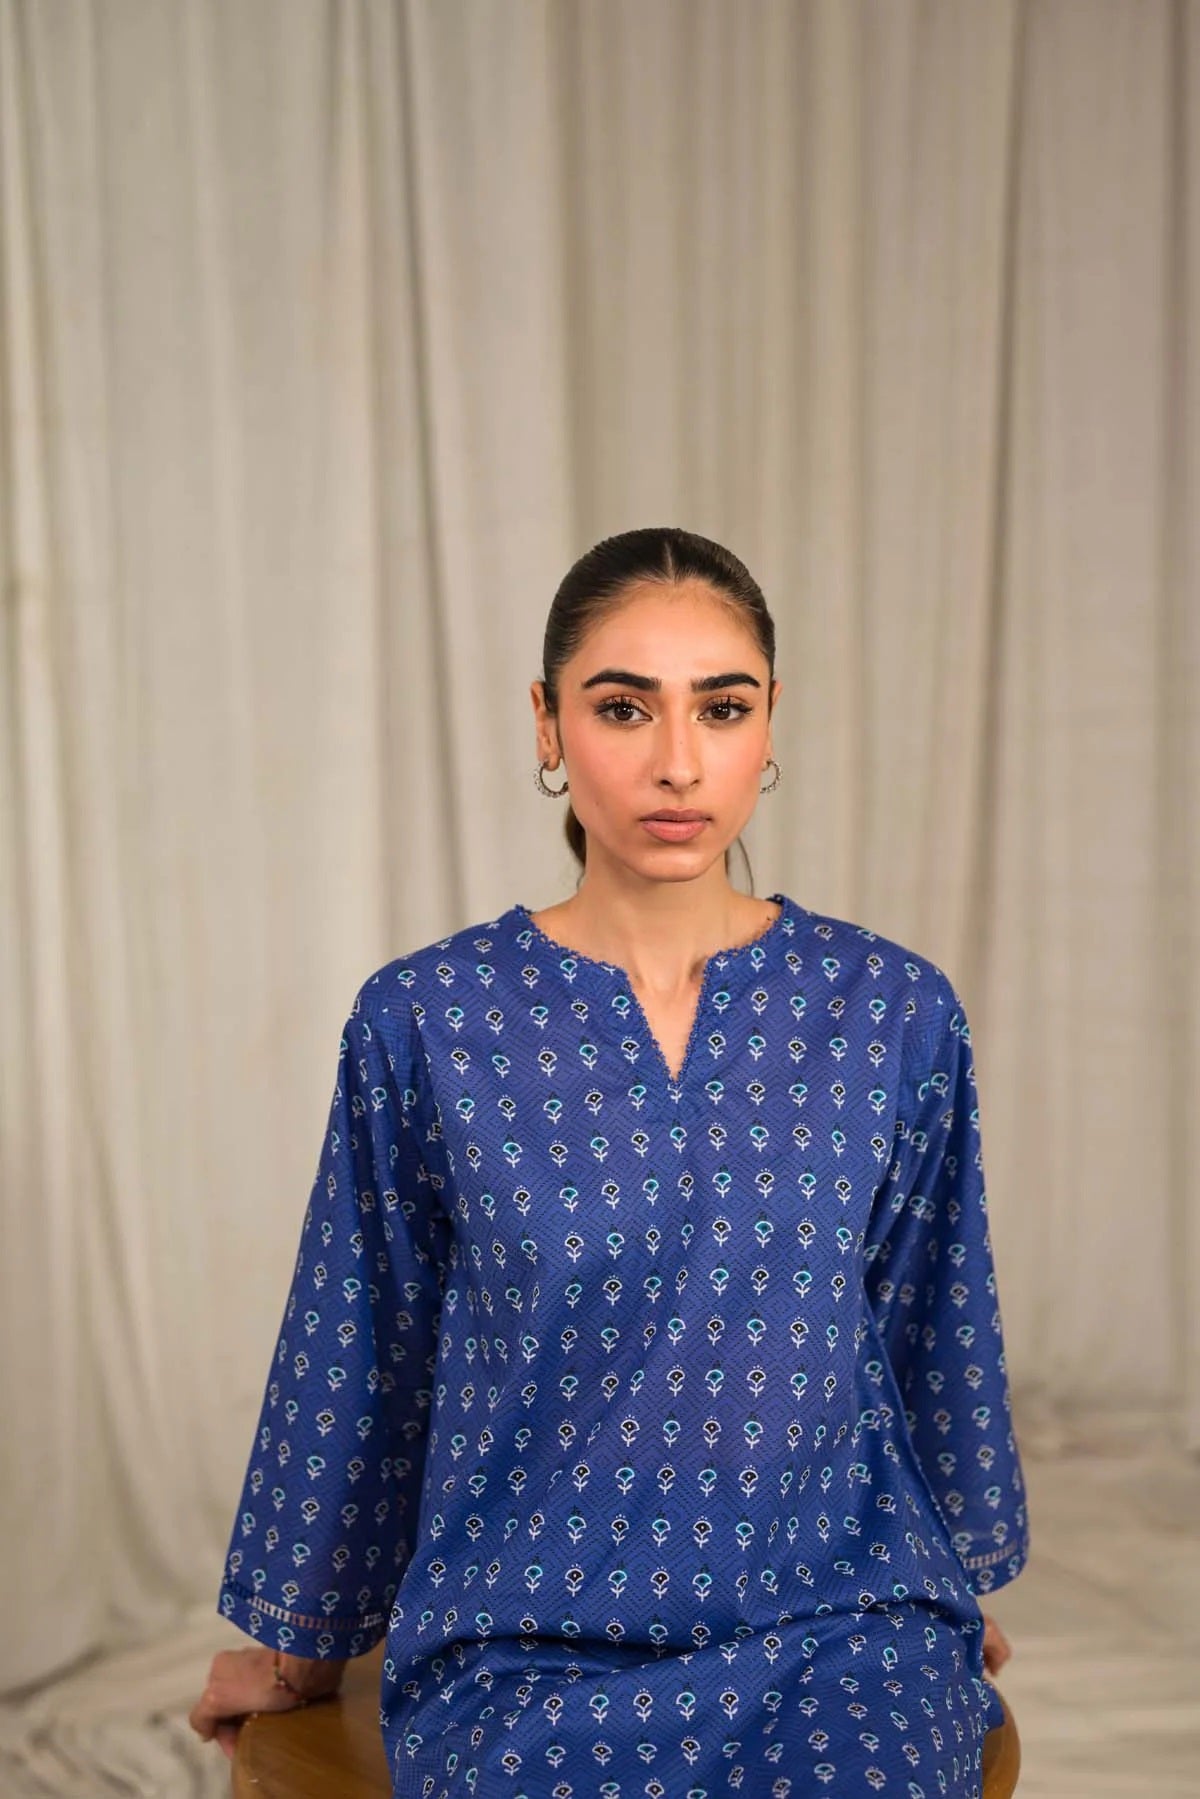 Sahar Printed Lawn Suits Unstitched 2 Piece SHR-S24-PL-V1-31 - Summer Collection